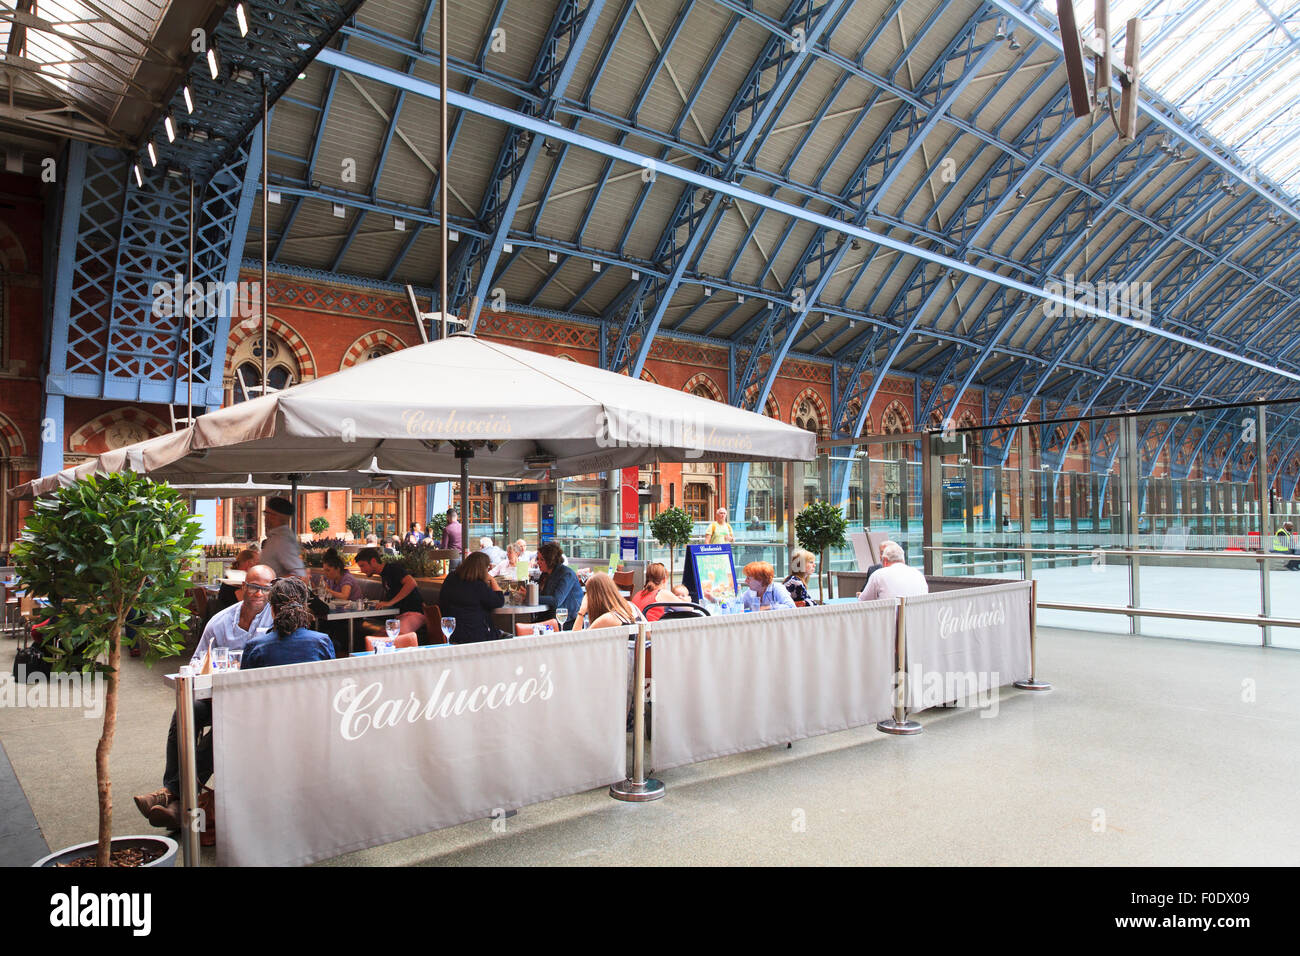 Carluccio's restaurant at St Pancras Railway Station London Stock Photo